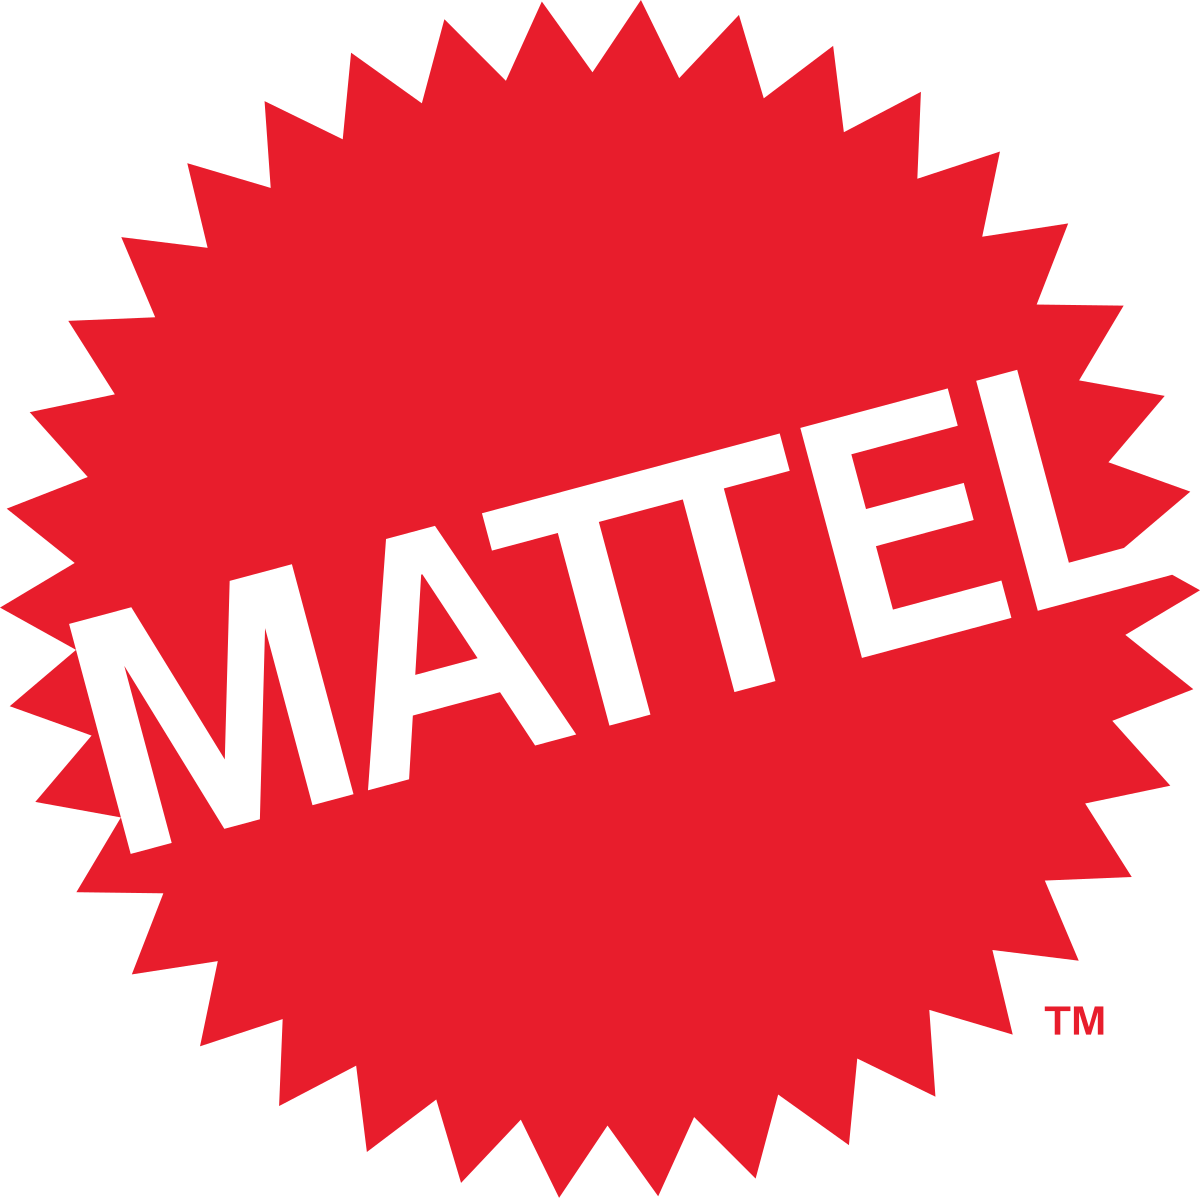 Mattel (arts Crafts Stationery Business)